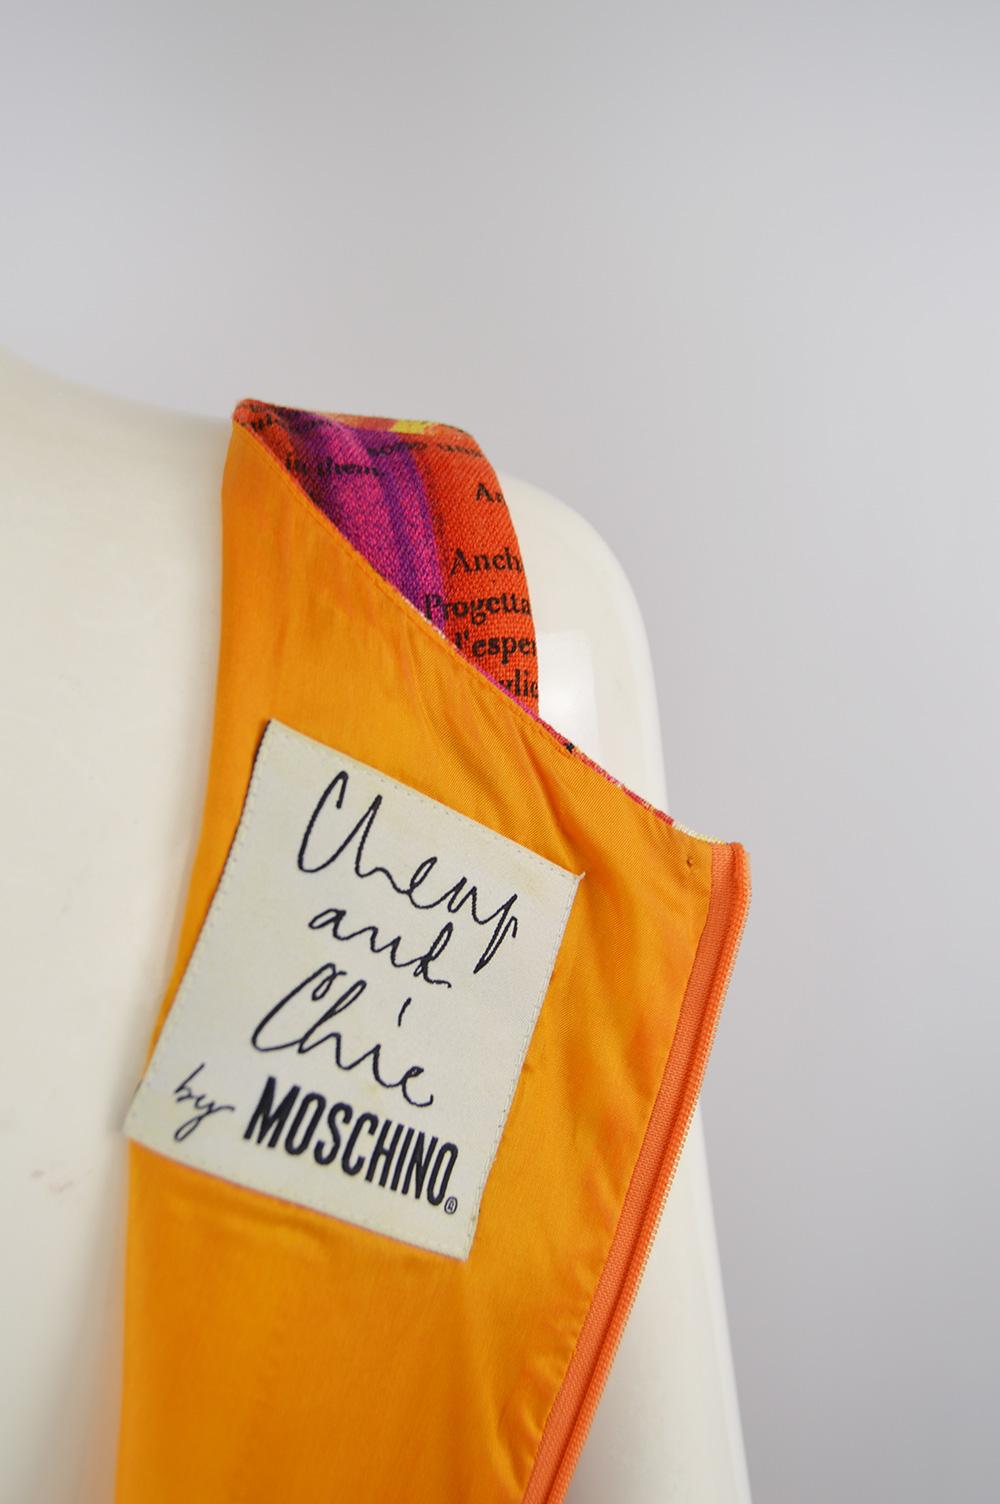 Moschino Cheap & Chic 'Recipe' Watercolor Stripe Print Rayon Dress, 1997 For Sale 1